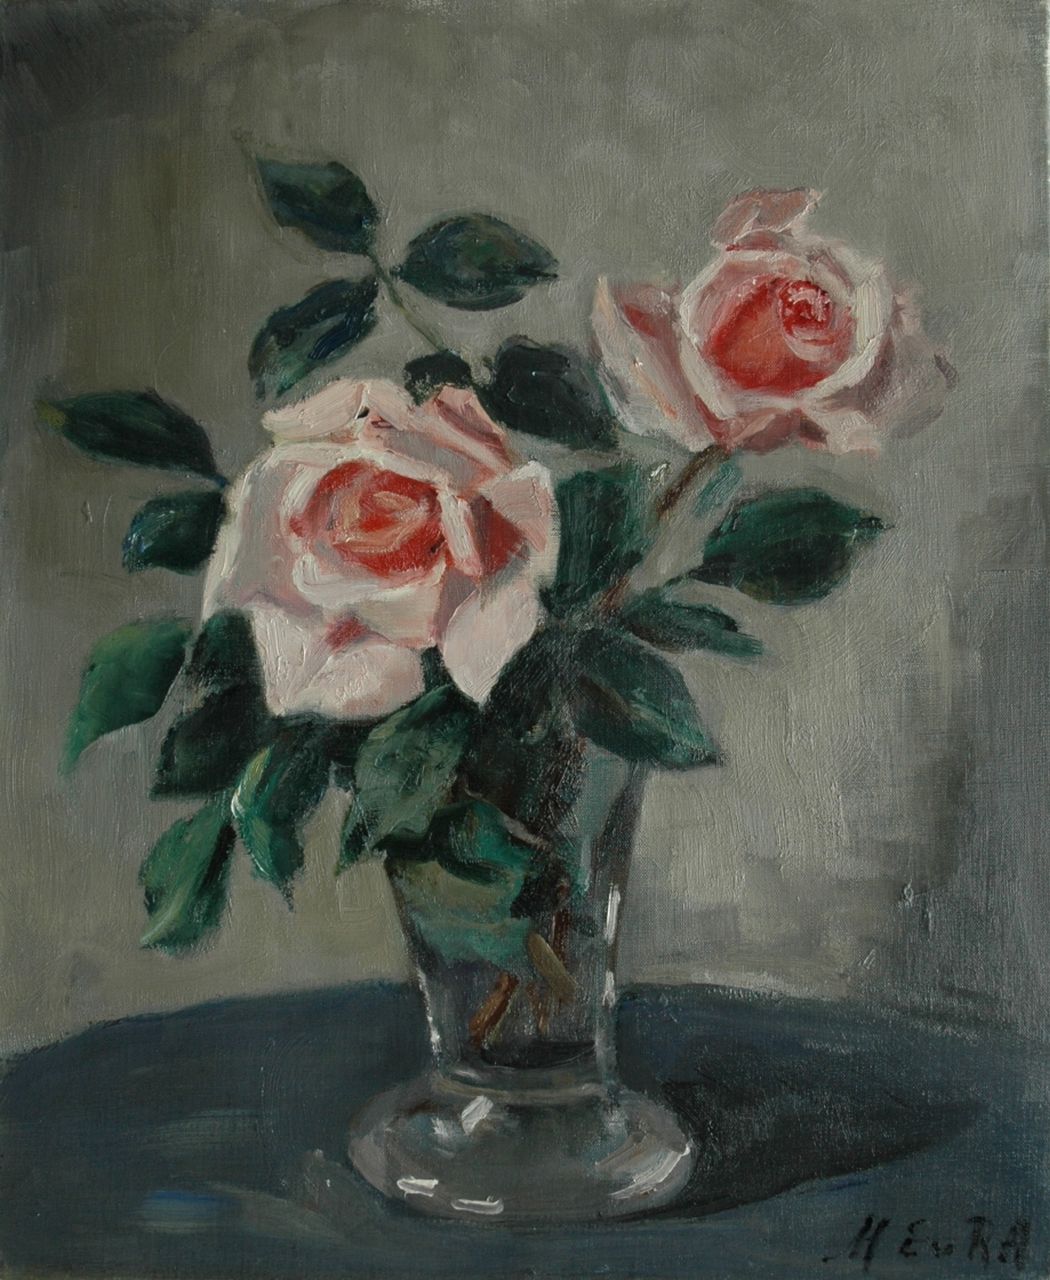 Regteren Altena M.E. van | 'Marie' Engelina van Regteren Altena, Roses, oil on canvas 46.2 x 38.2 cm, signed l.r. with initials